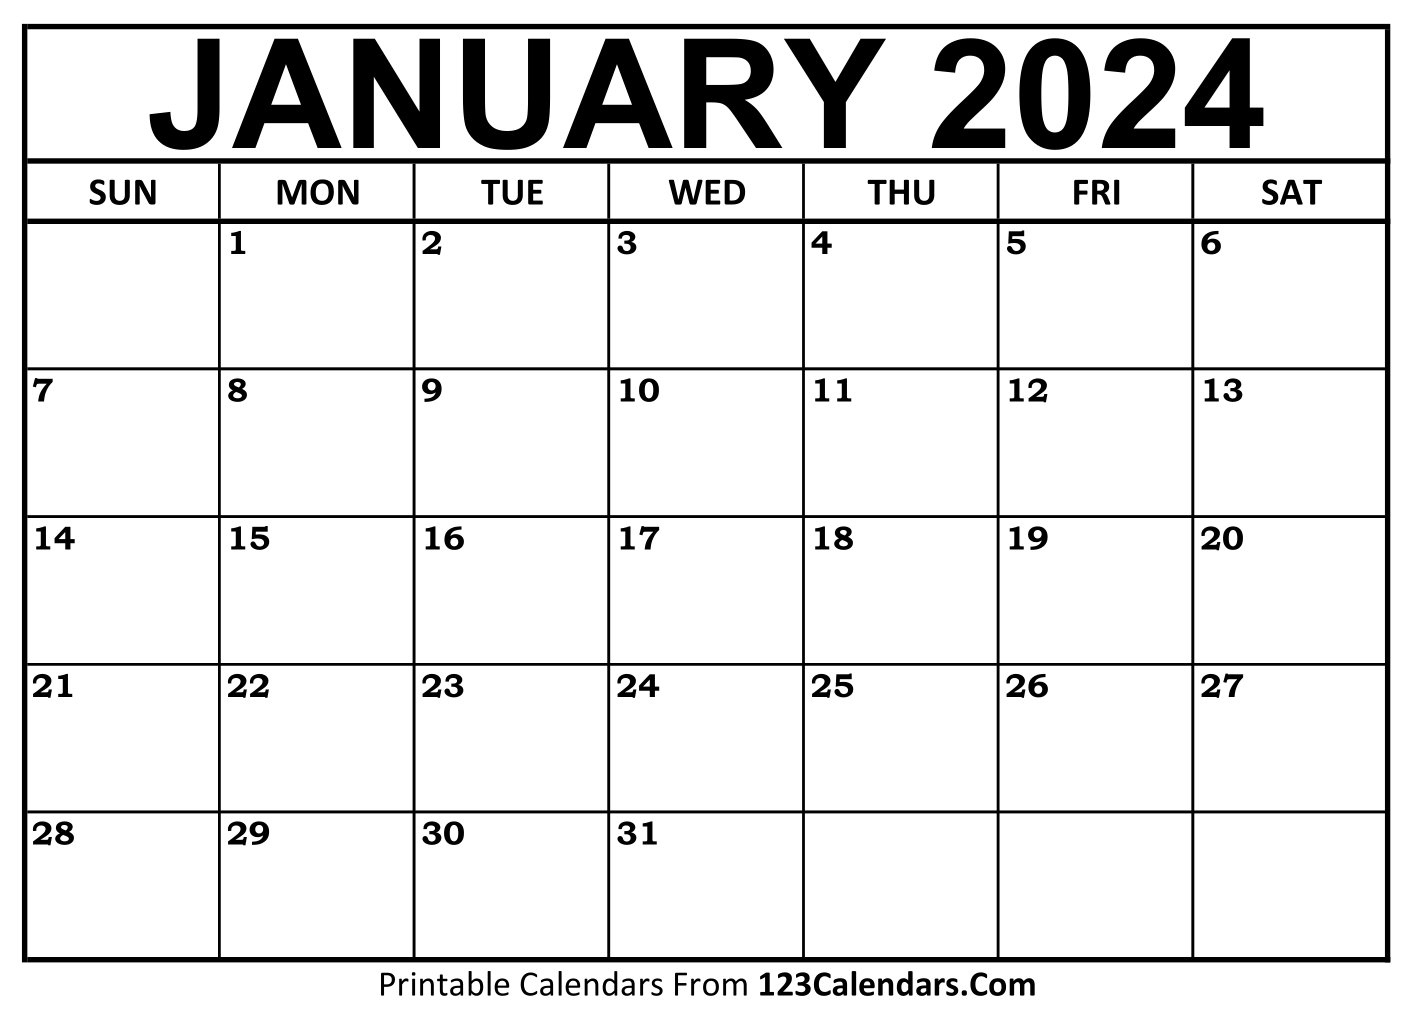 Printable January 2024 Calendar Templates - 123Calendars | January 2024 Calendar Printable Free